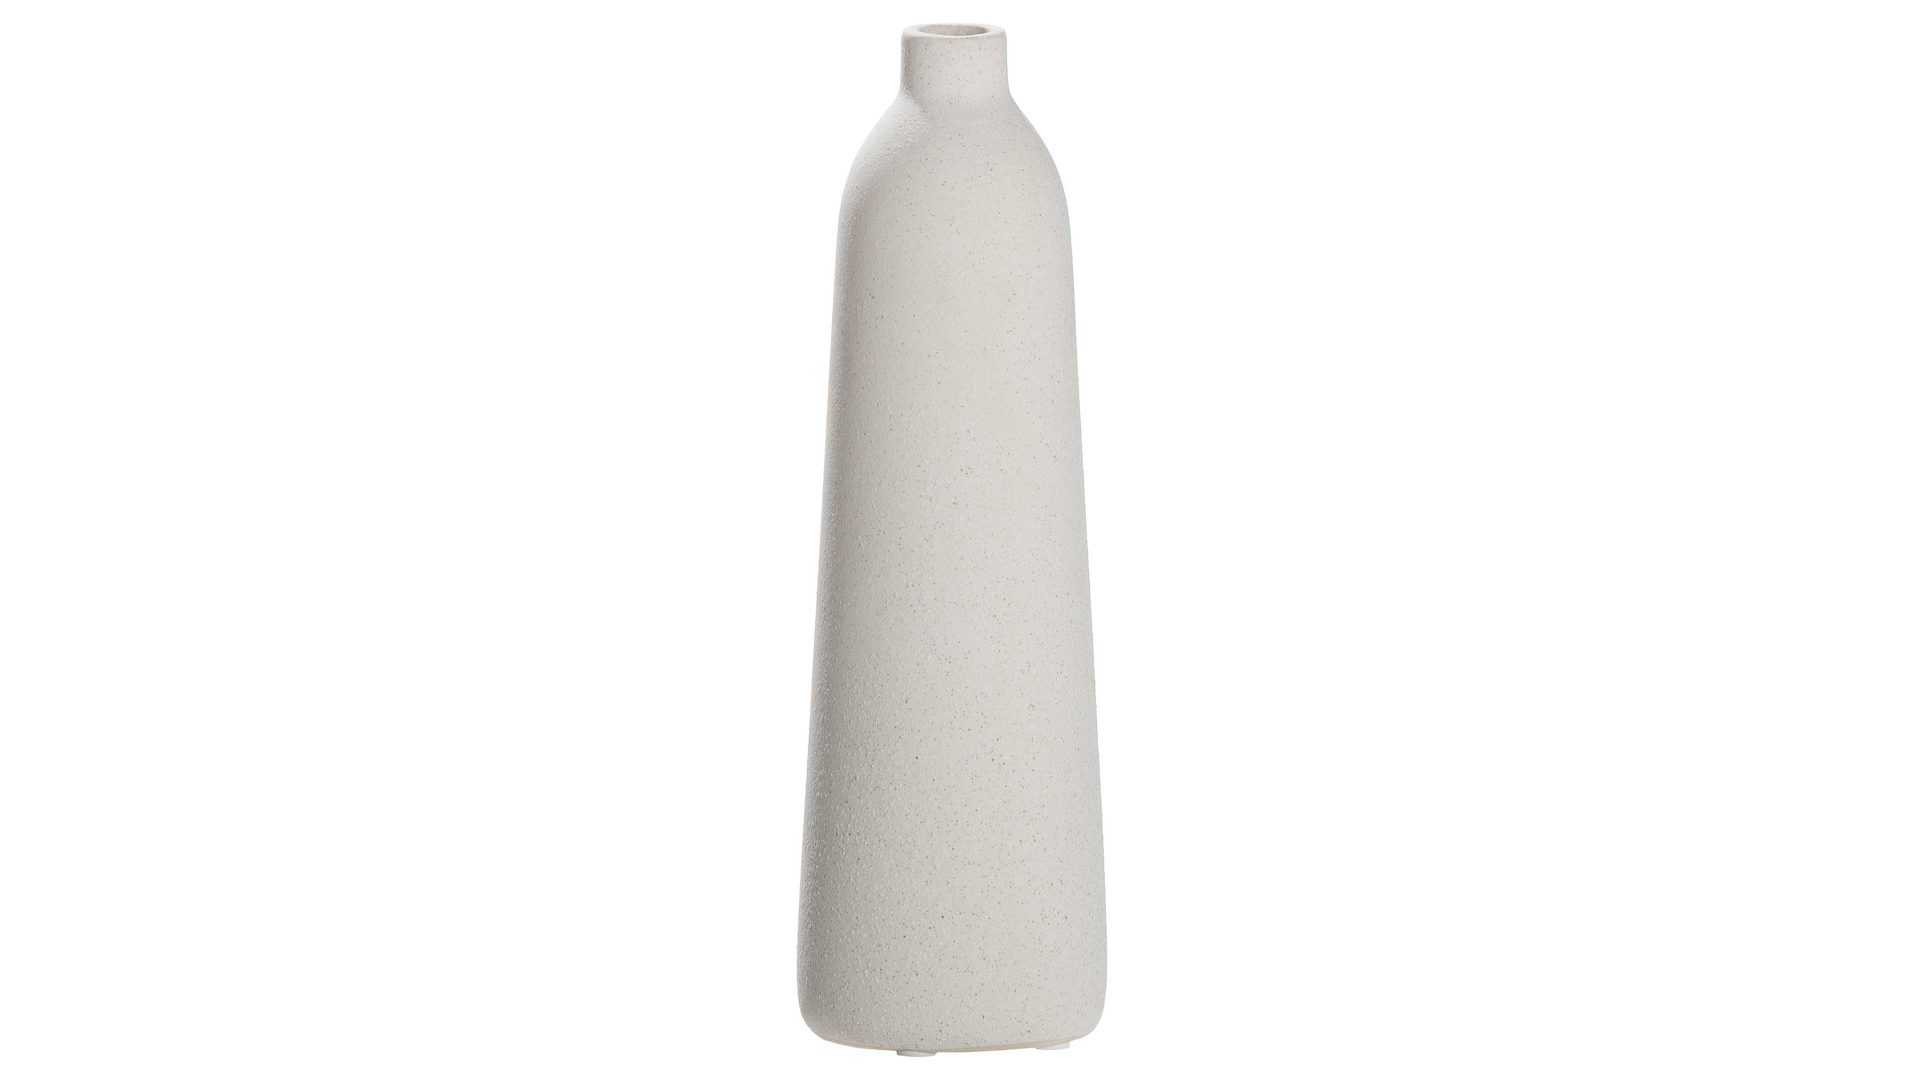 Vase Interliving BEST BUDDYS! aus Keramik in Weiß Interliving BEST BUDDYS! Vase Grezzo cremeweiße Keramik - Höhe ca. 30 cm